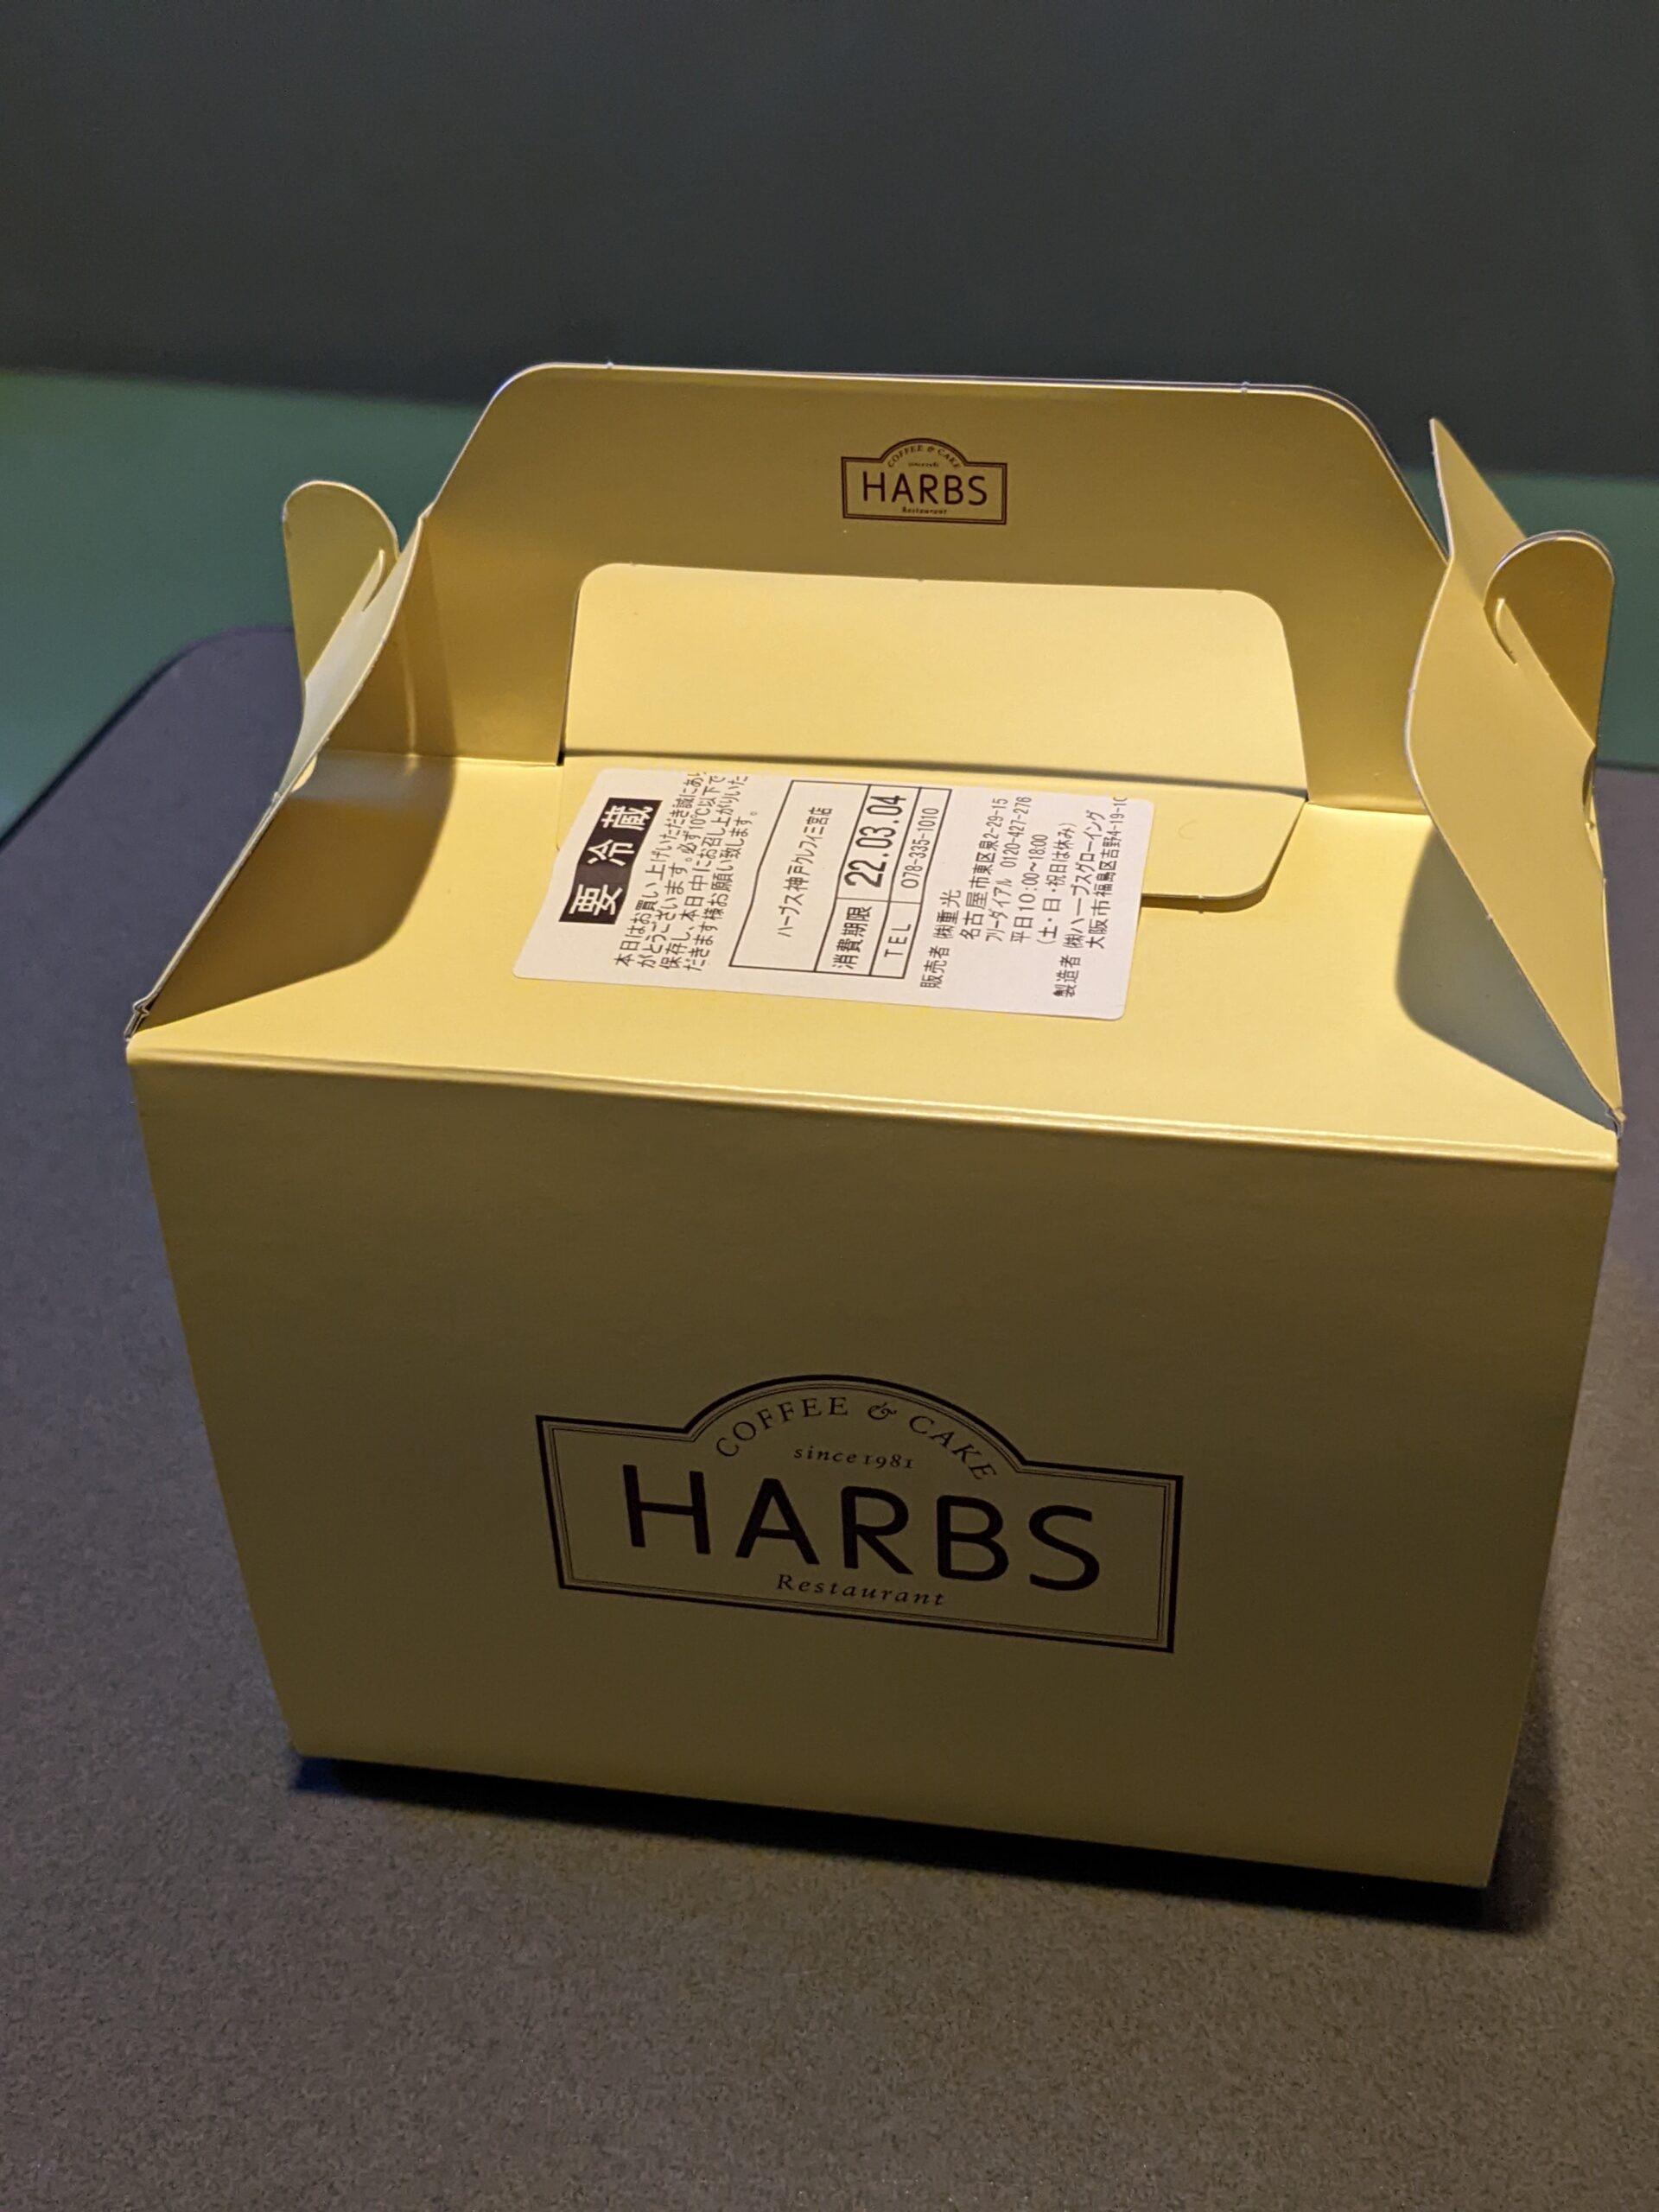 HARBSのケーキ箱